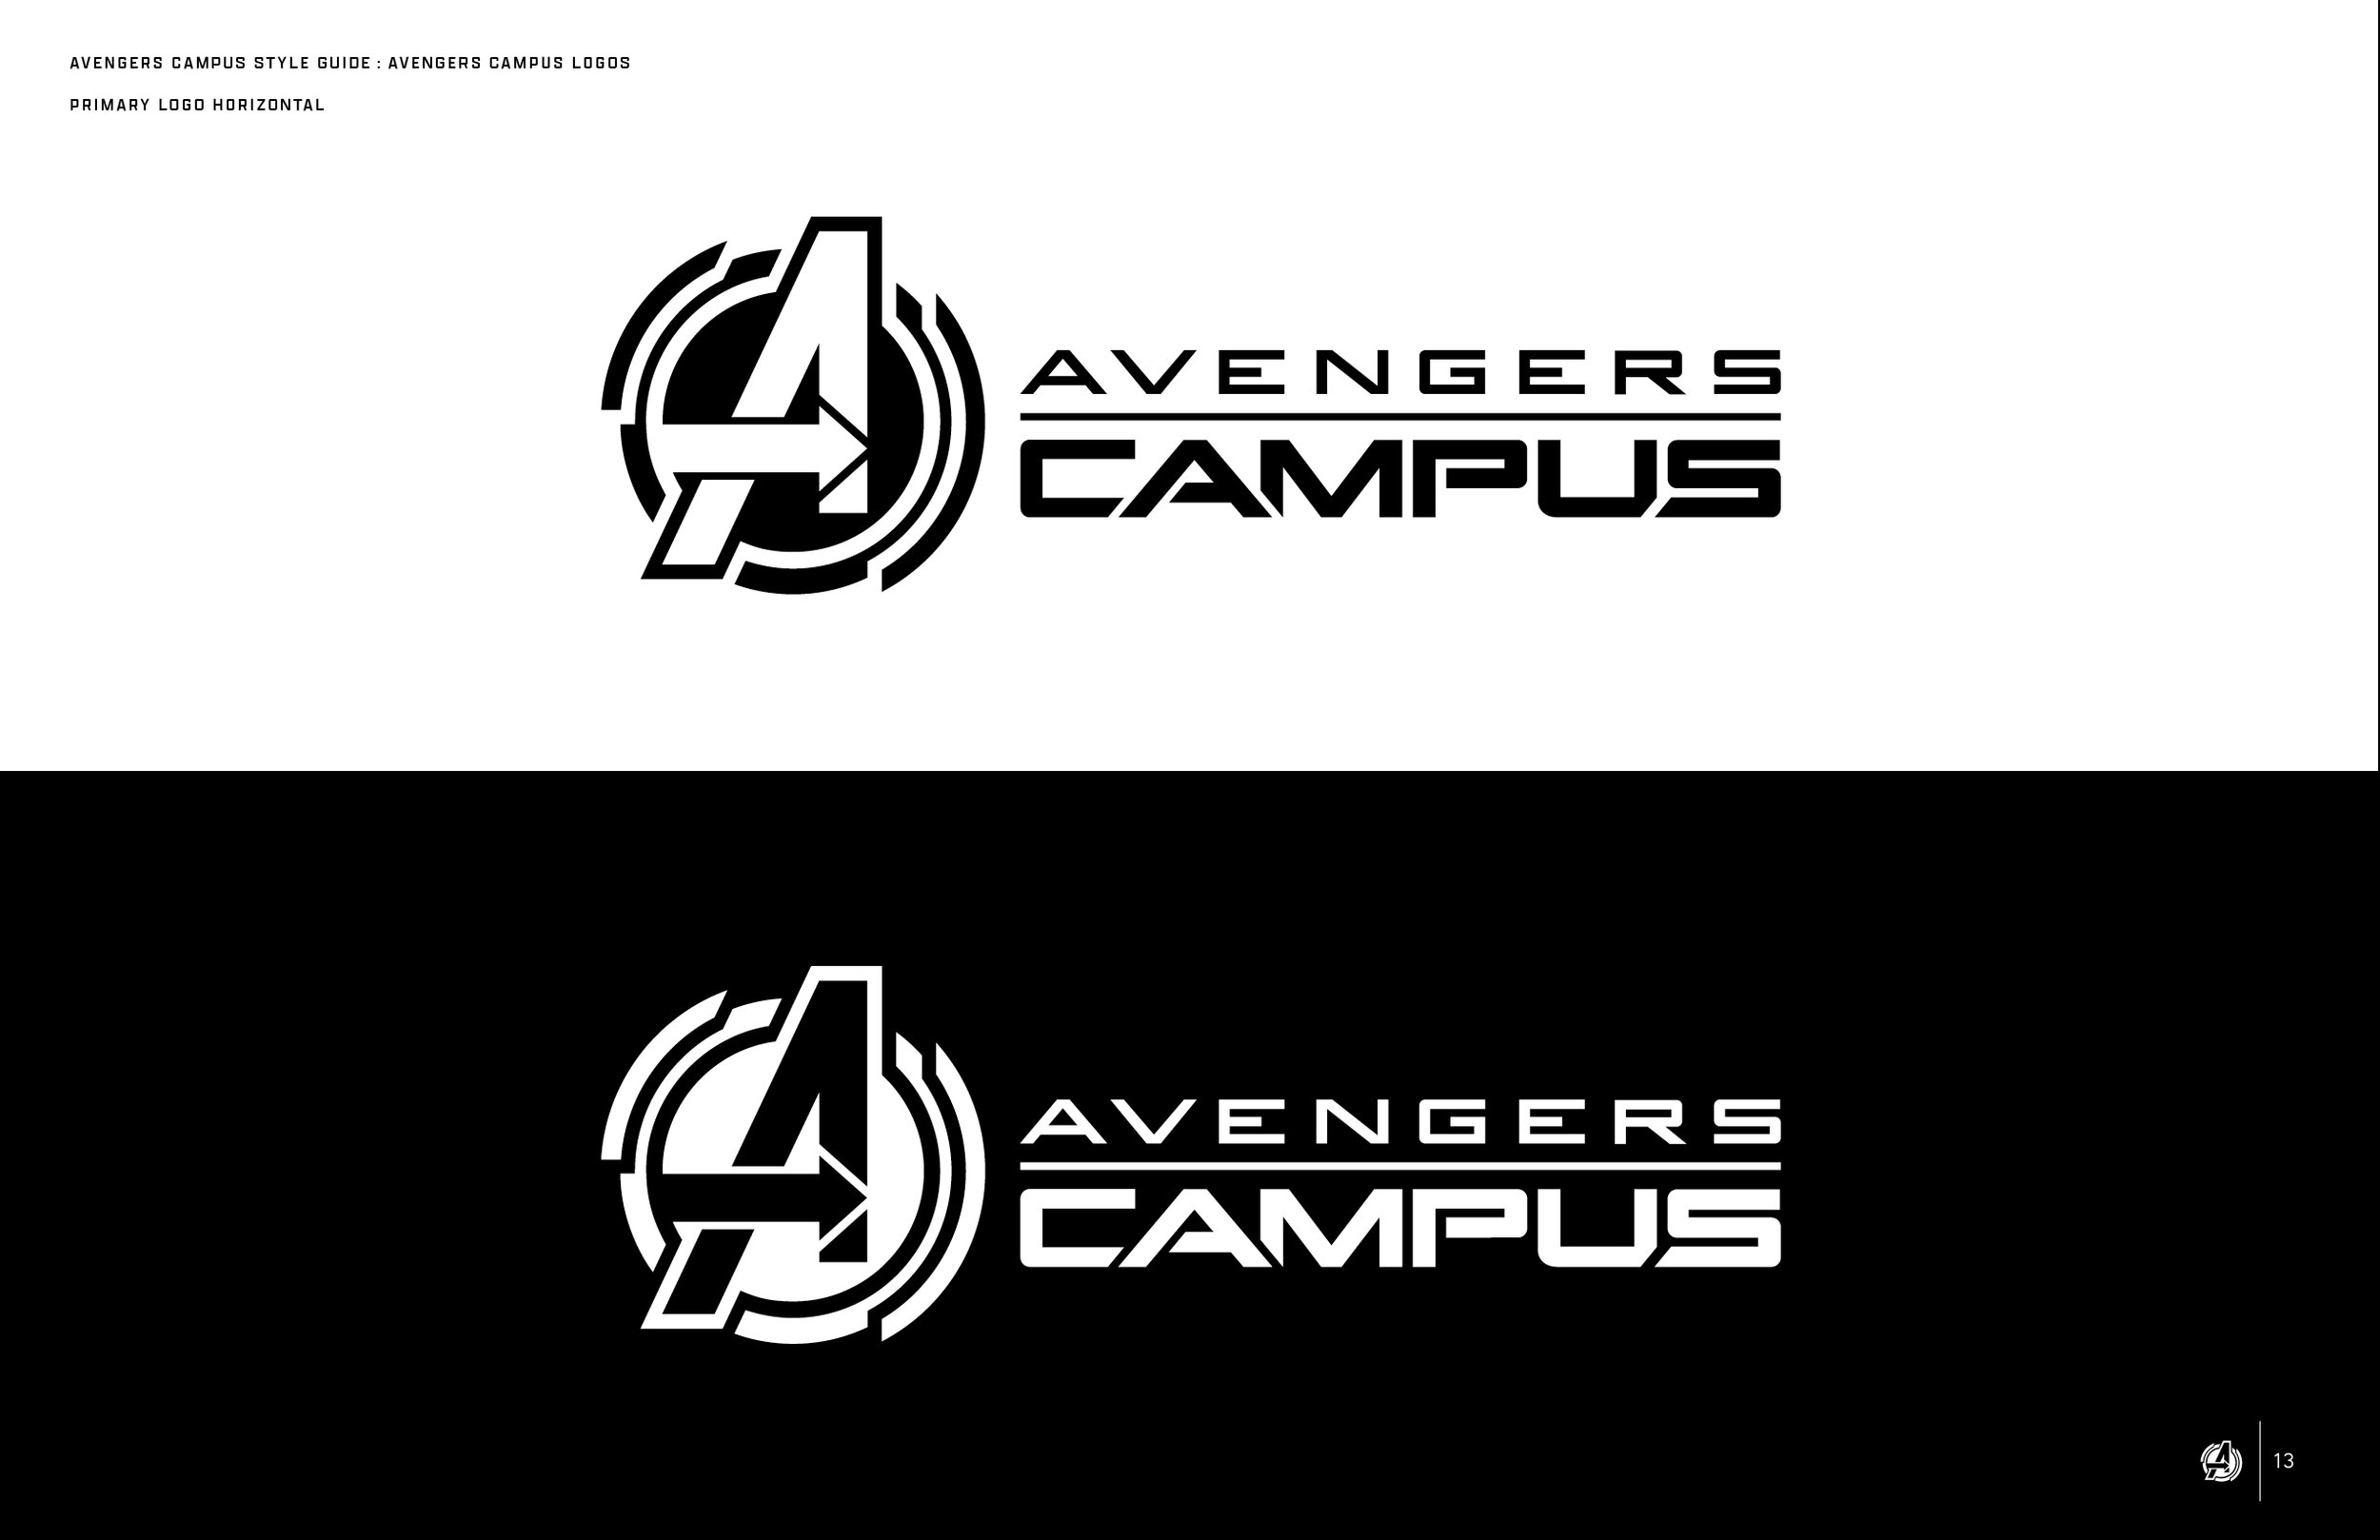 AvengersCampus_StyleGuide_Website_13.jpg